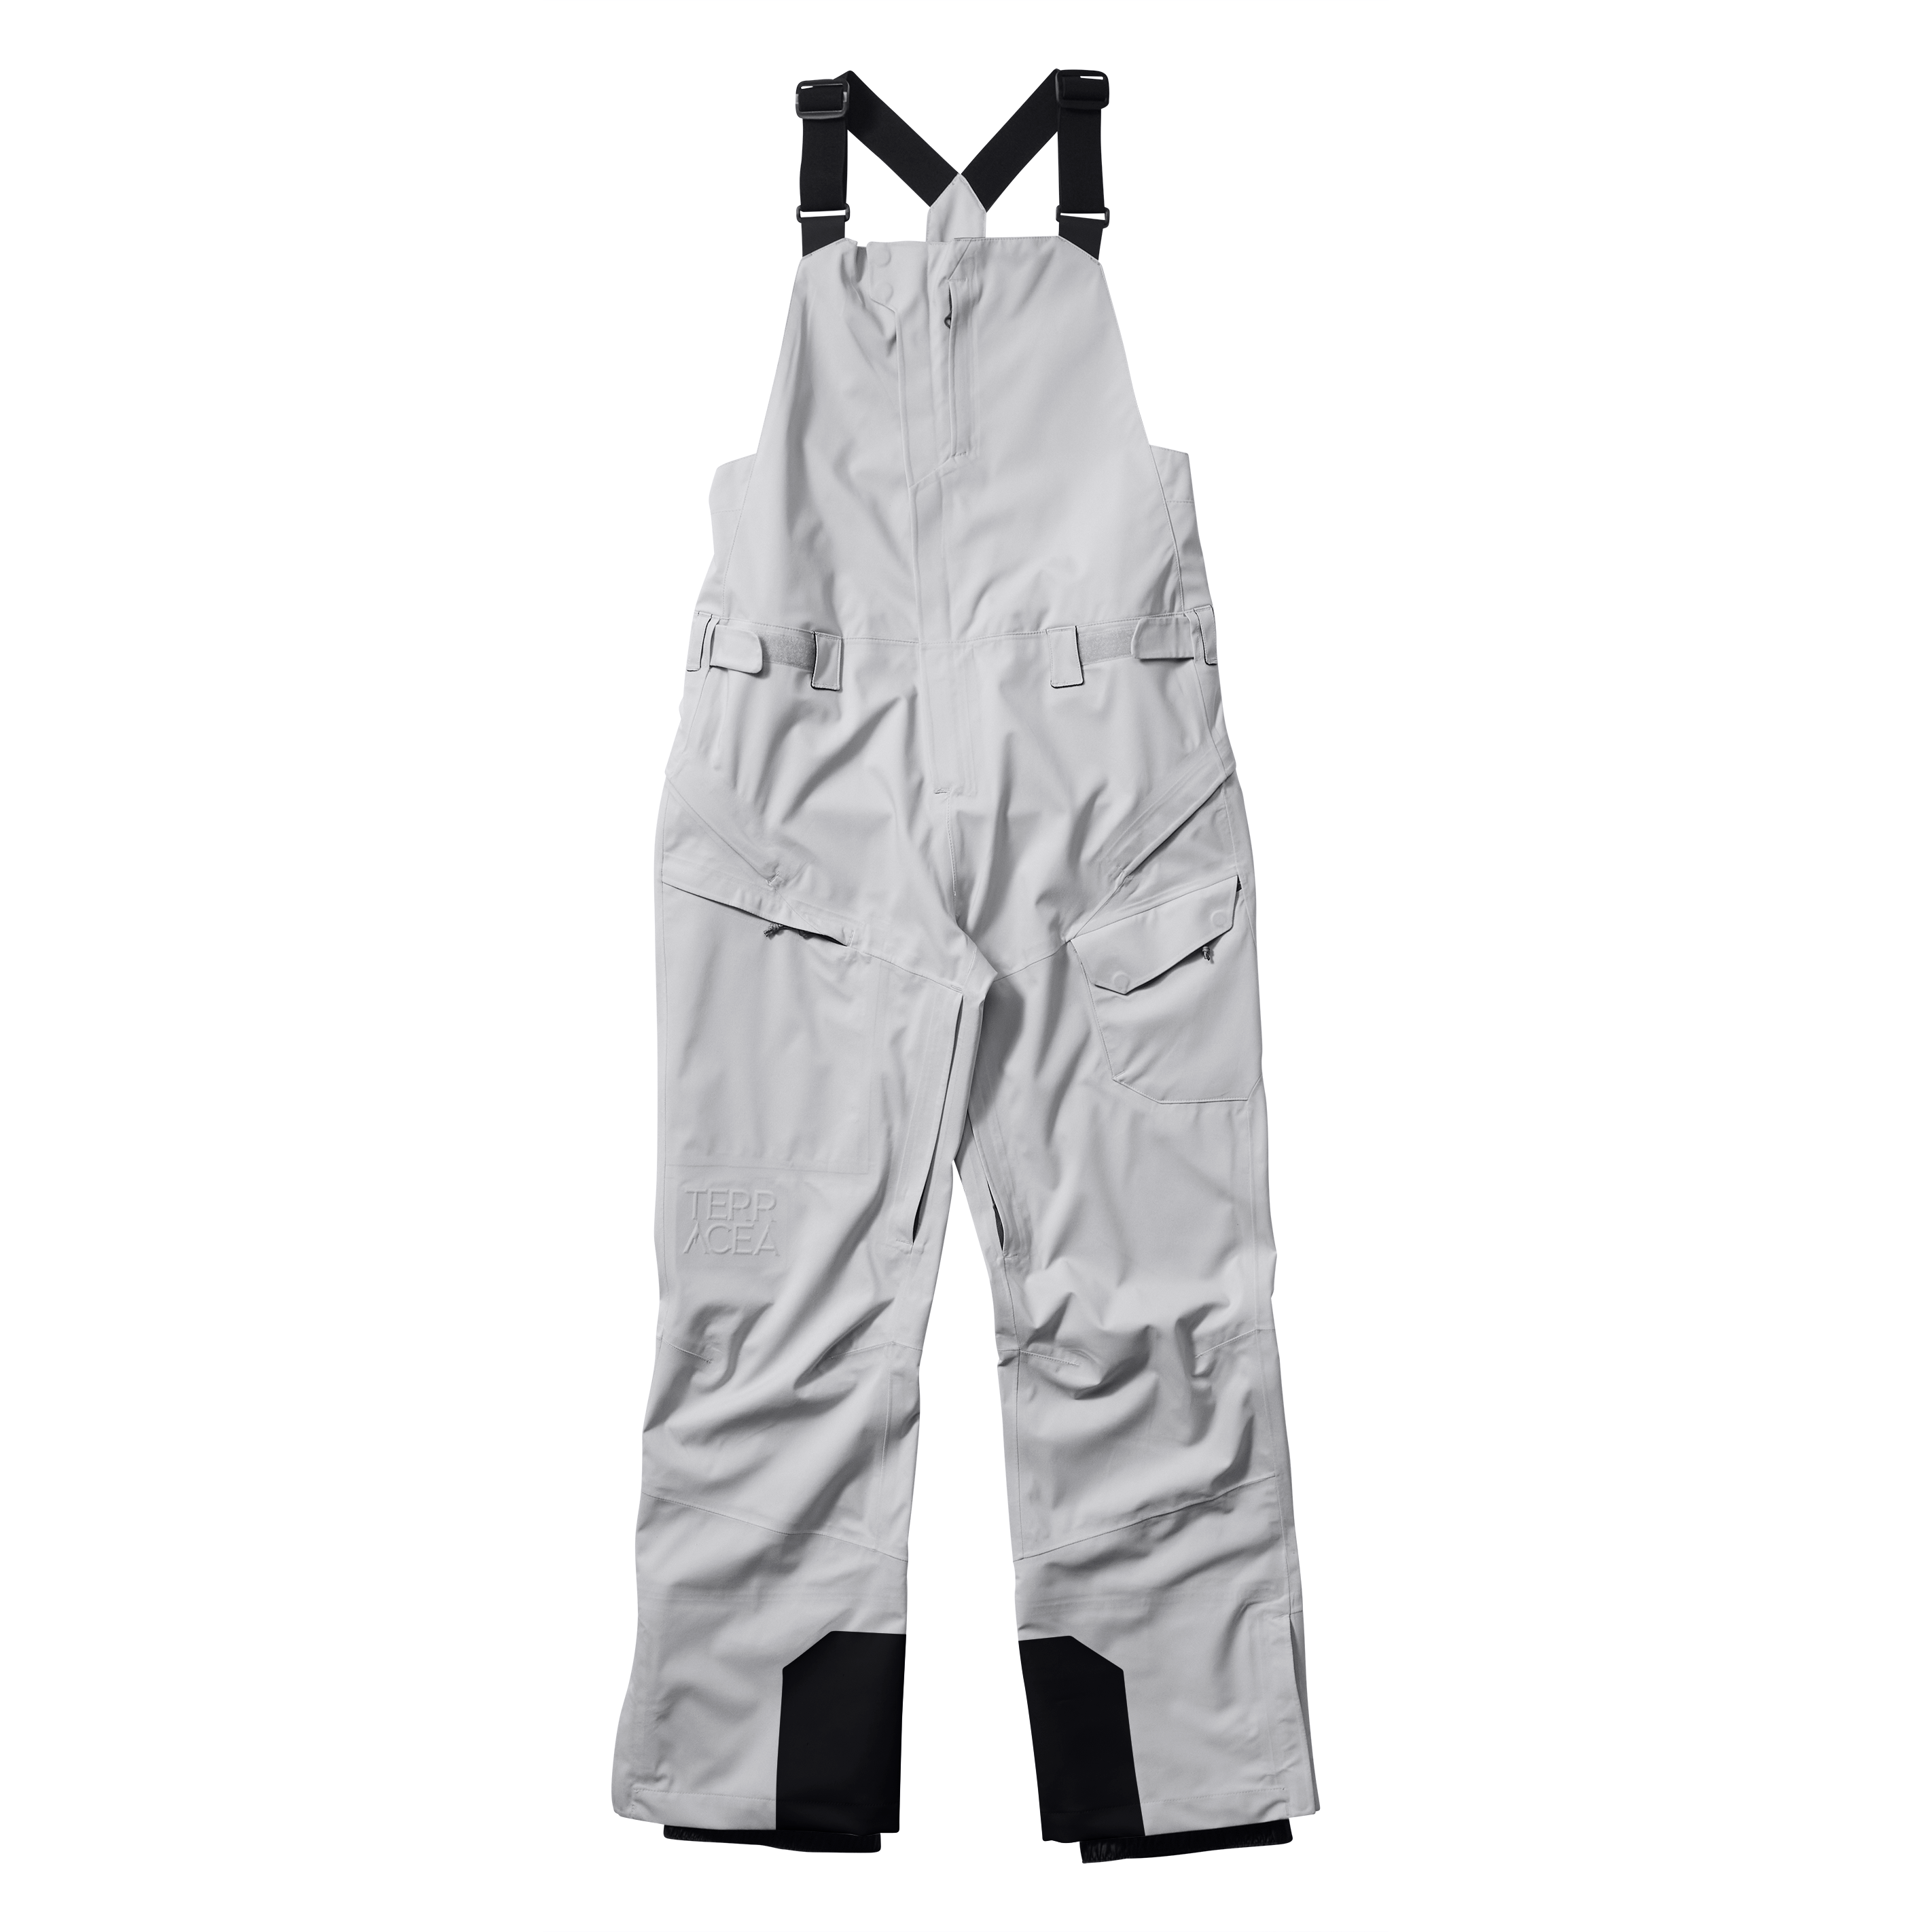 Moonbeam 3L Bib Pant - Durable, Waterproof Ski Wear